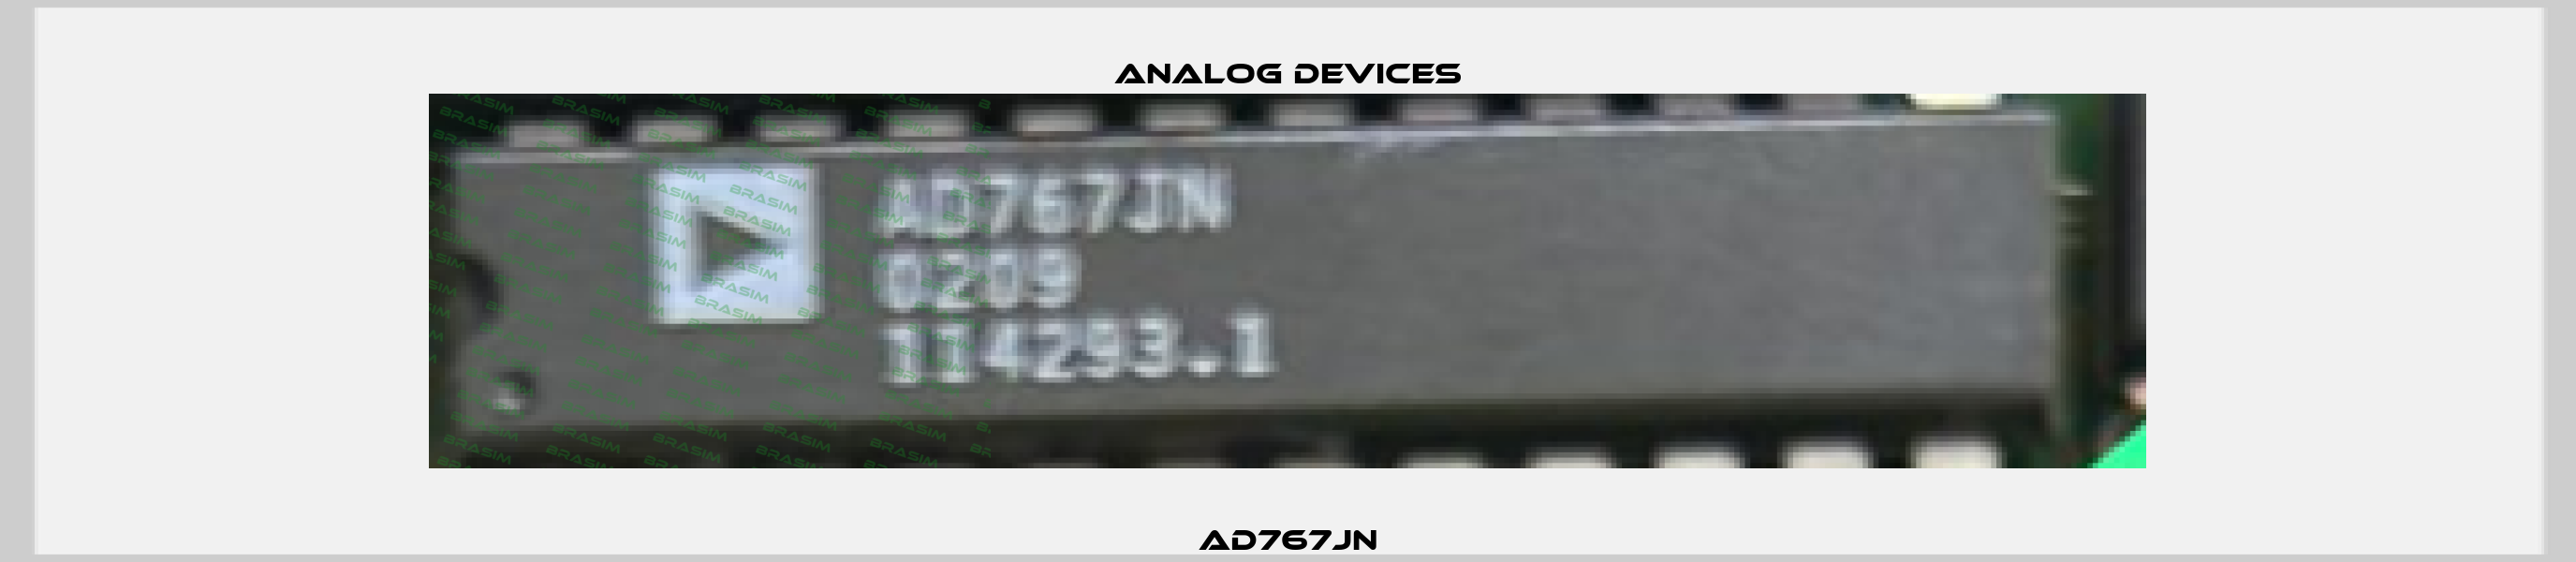 AD767JN Analog Devices